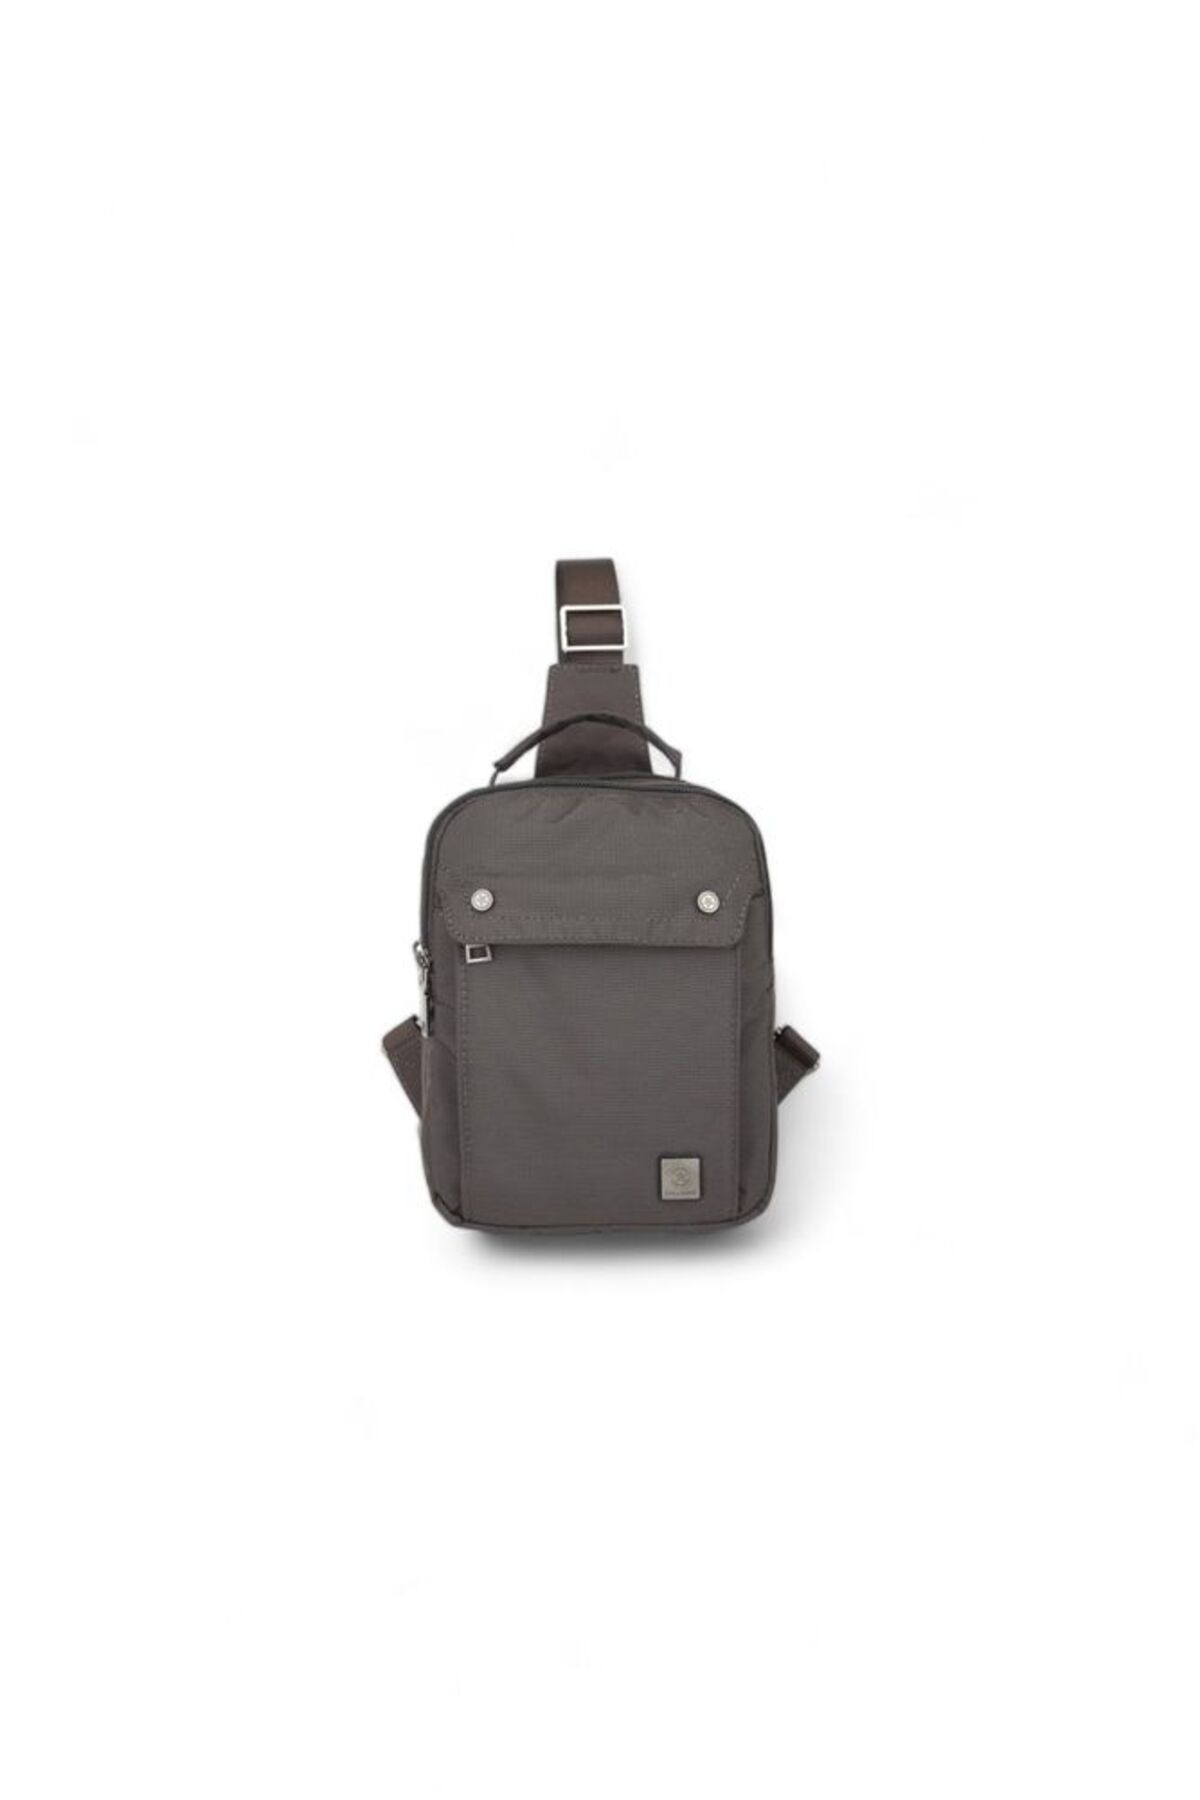 Smart Bags Exclusive Serisi Uniseks Bodybag Omuz Çantası Smart Bags 8706